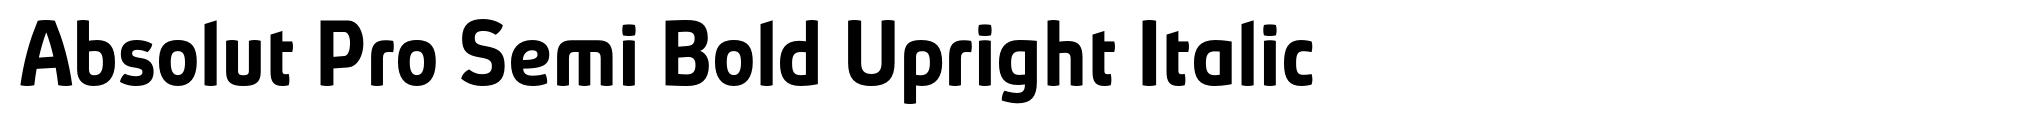 Absolut Pro Semi Bold Upright Italic image